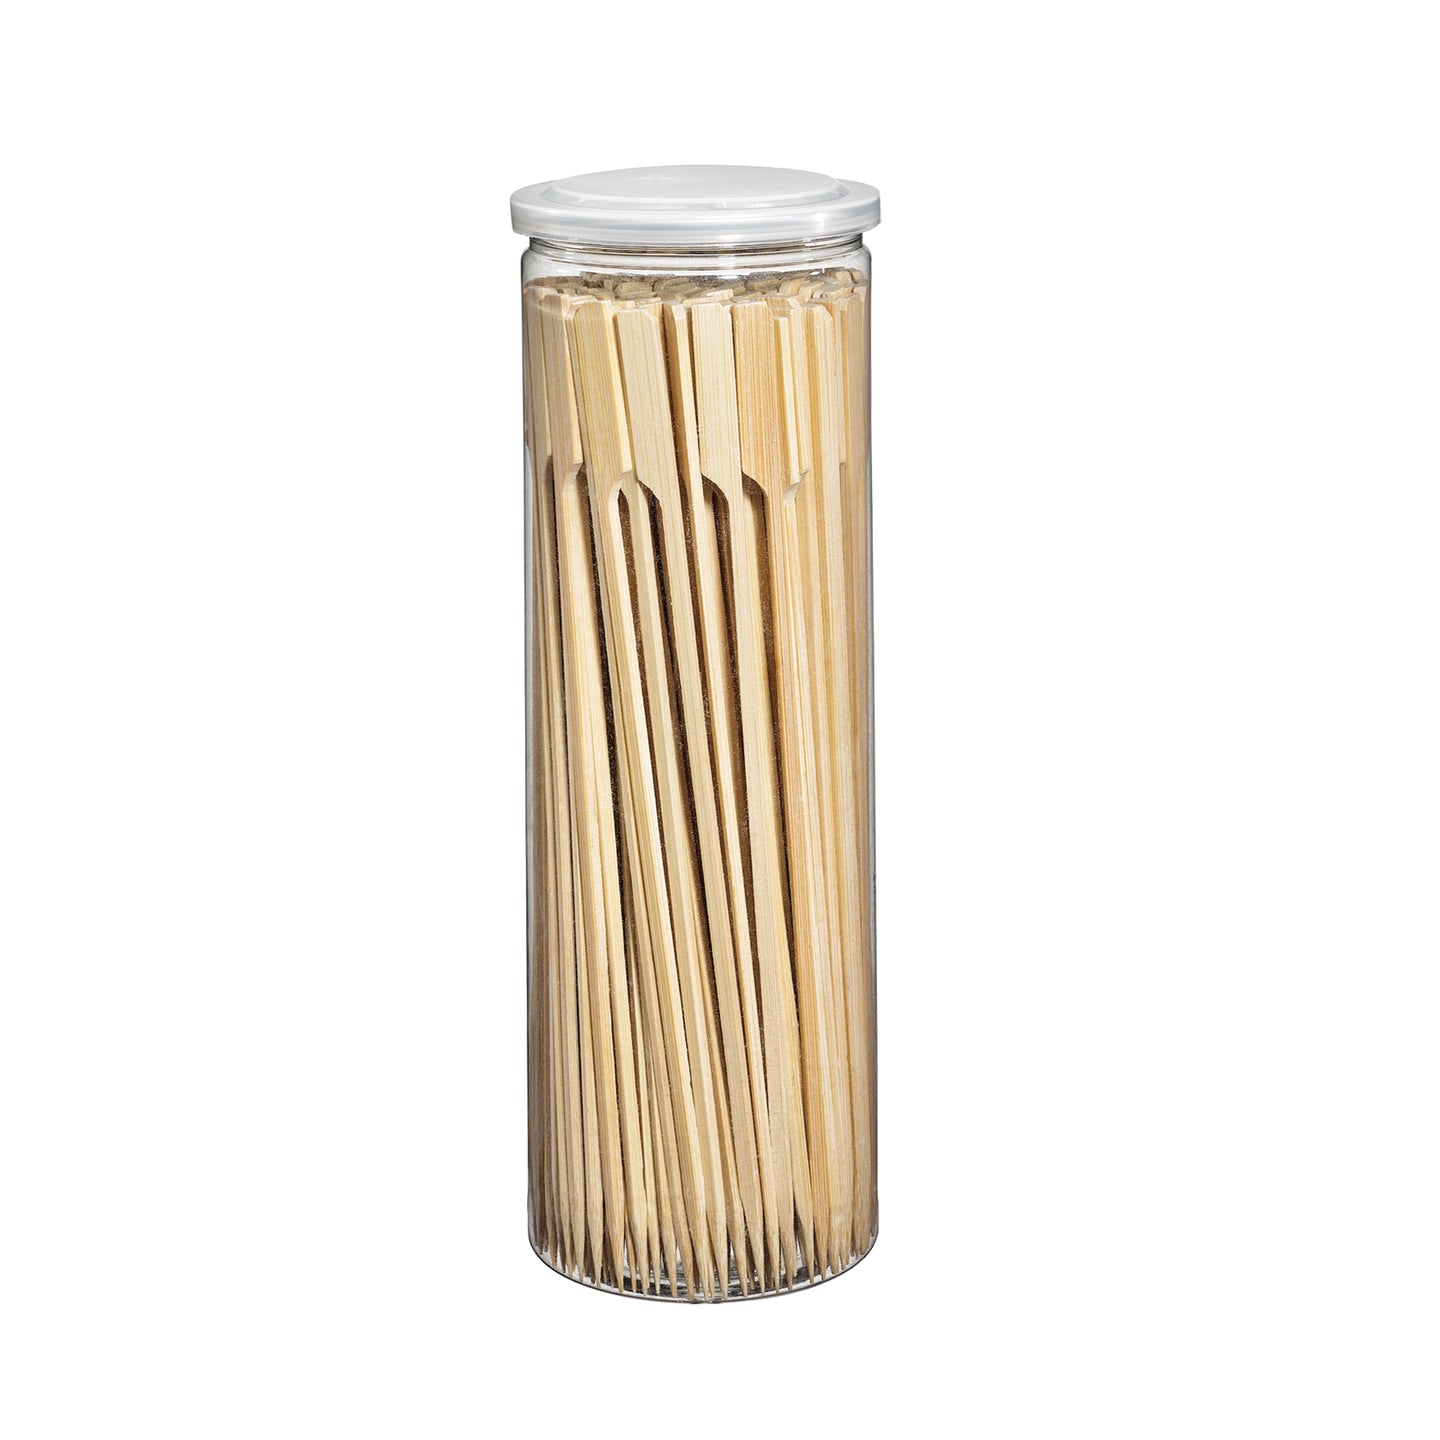 Kuchenprofi BBQ Bamboo Skewers / 23cm *